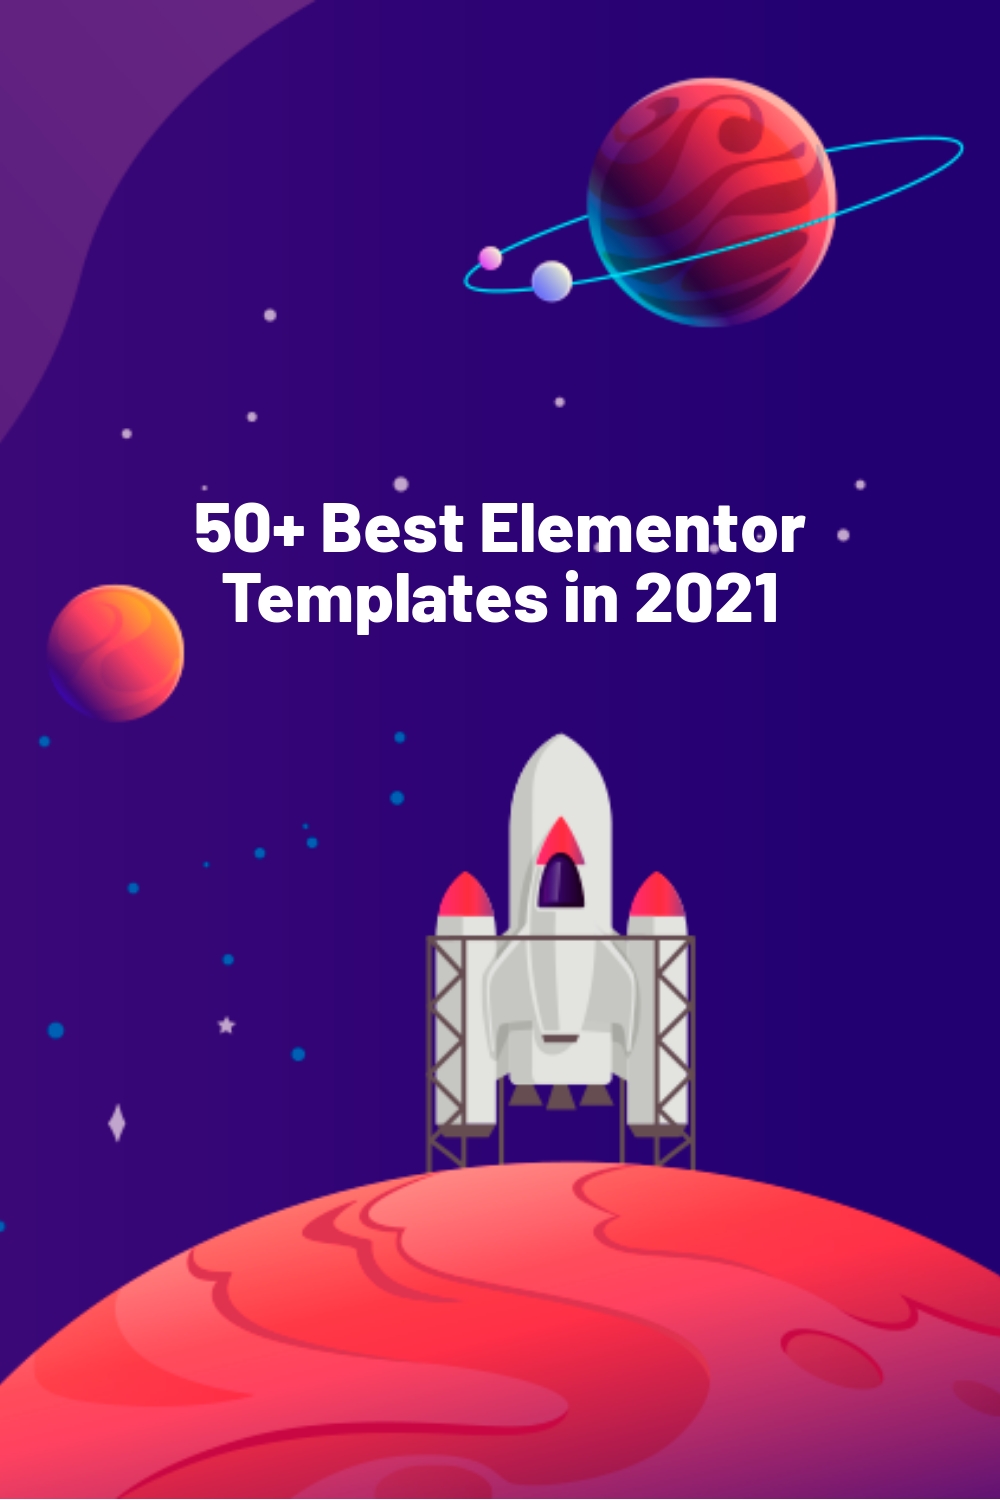 50+ Best Elementor Templates in 2021